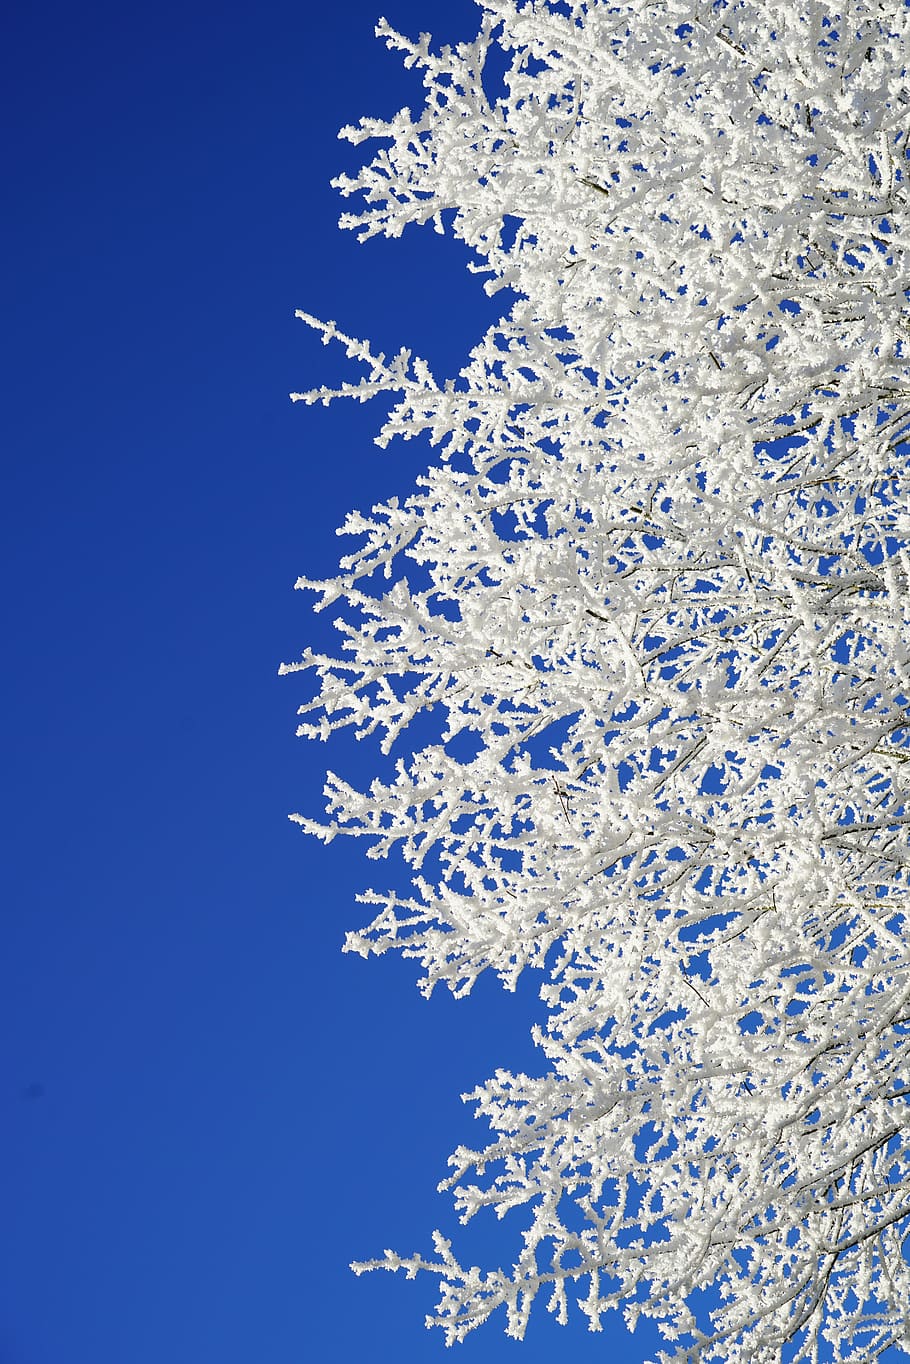 Snowflake photography picture 1080P, 2K, 4K, 5K HD wallpaper free download